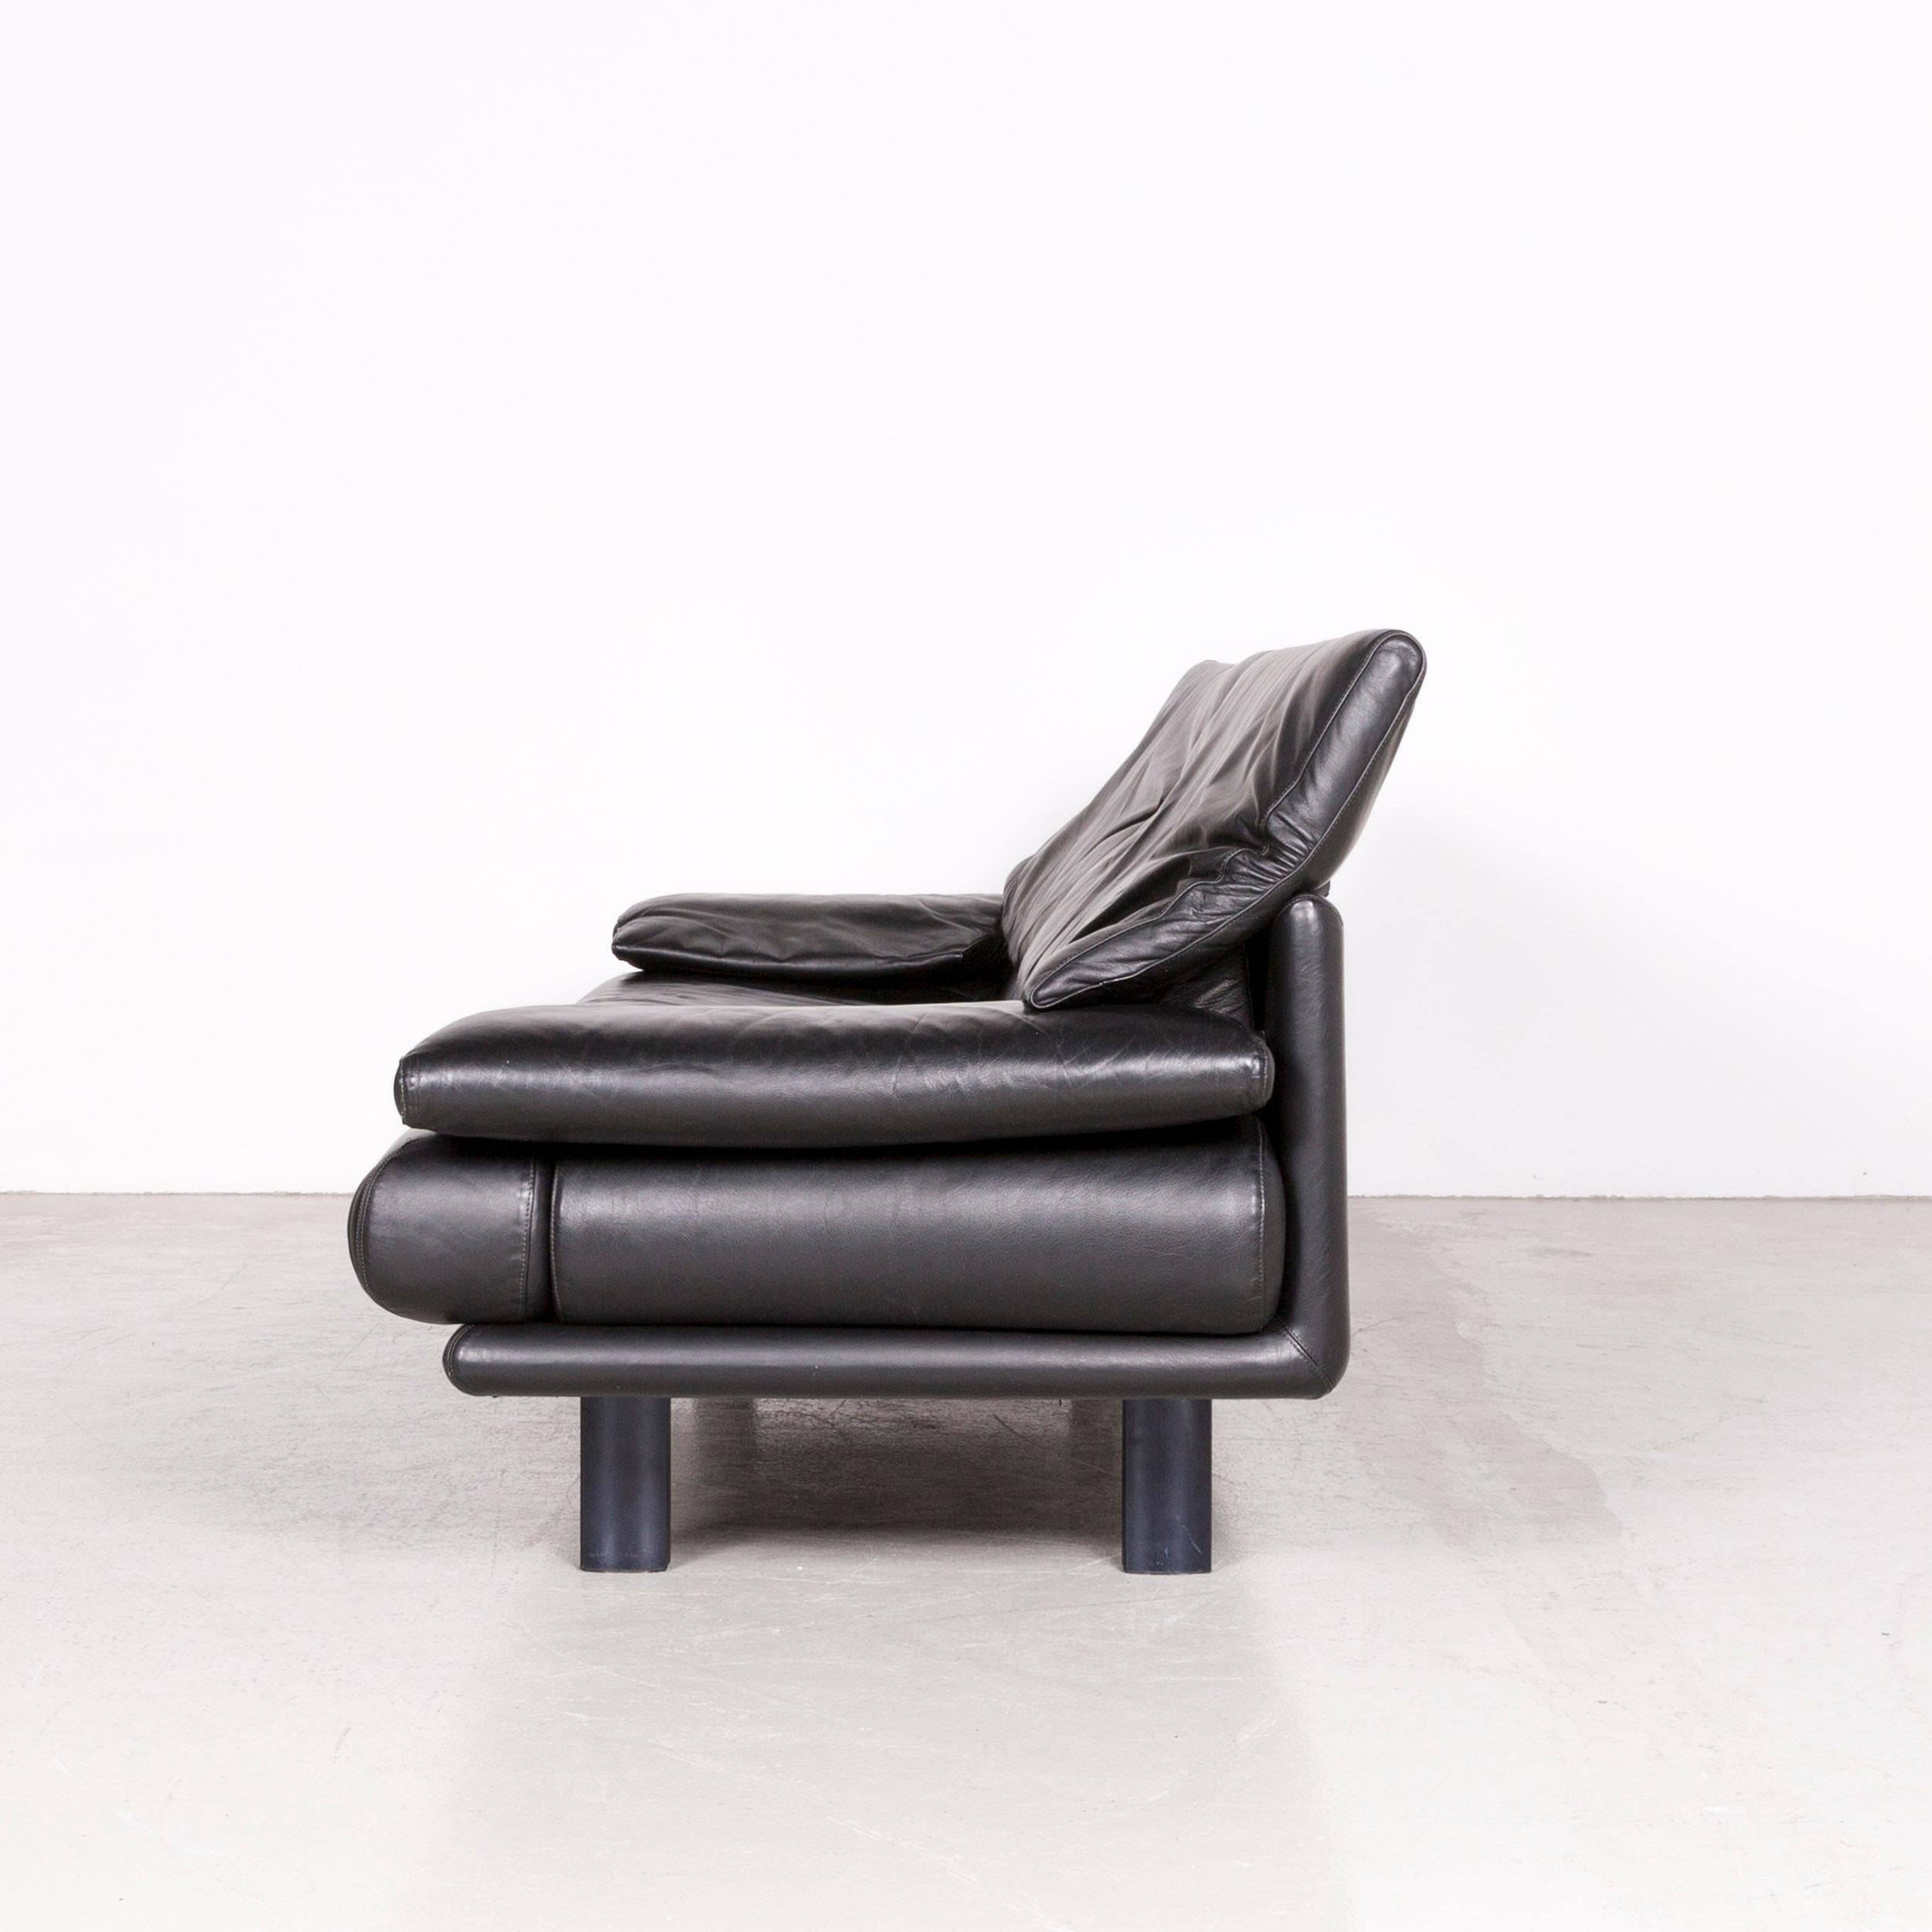 B&B Italia Alanda Designer Leather Sofa Black Three-Seat Couch Relax For Sale 4